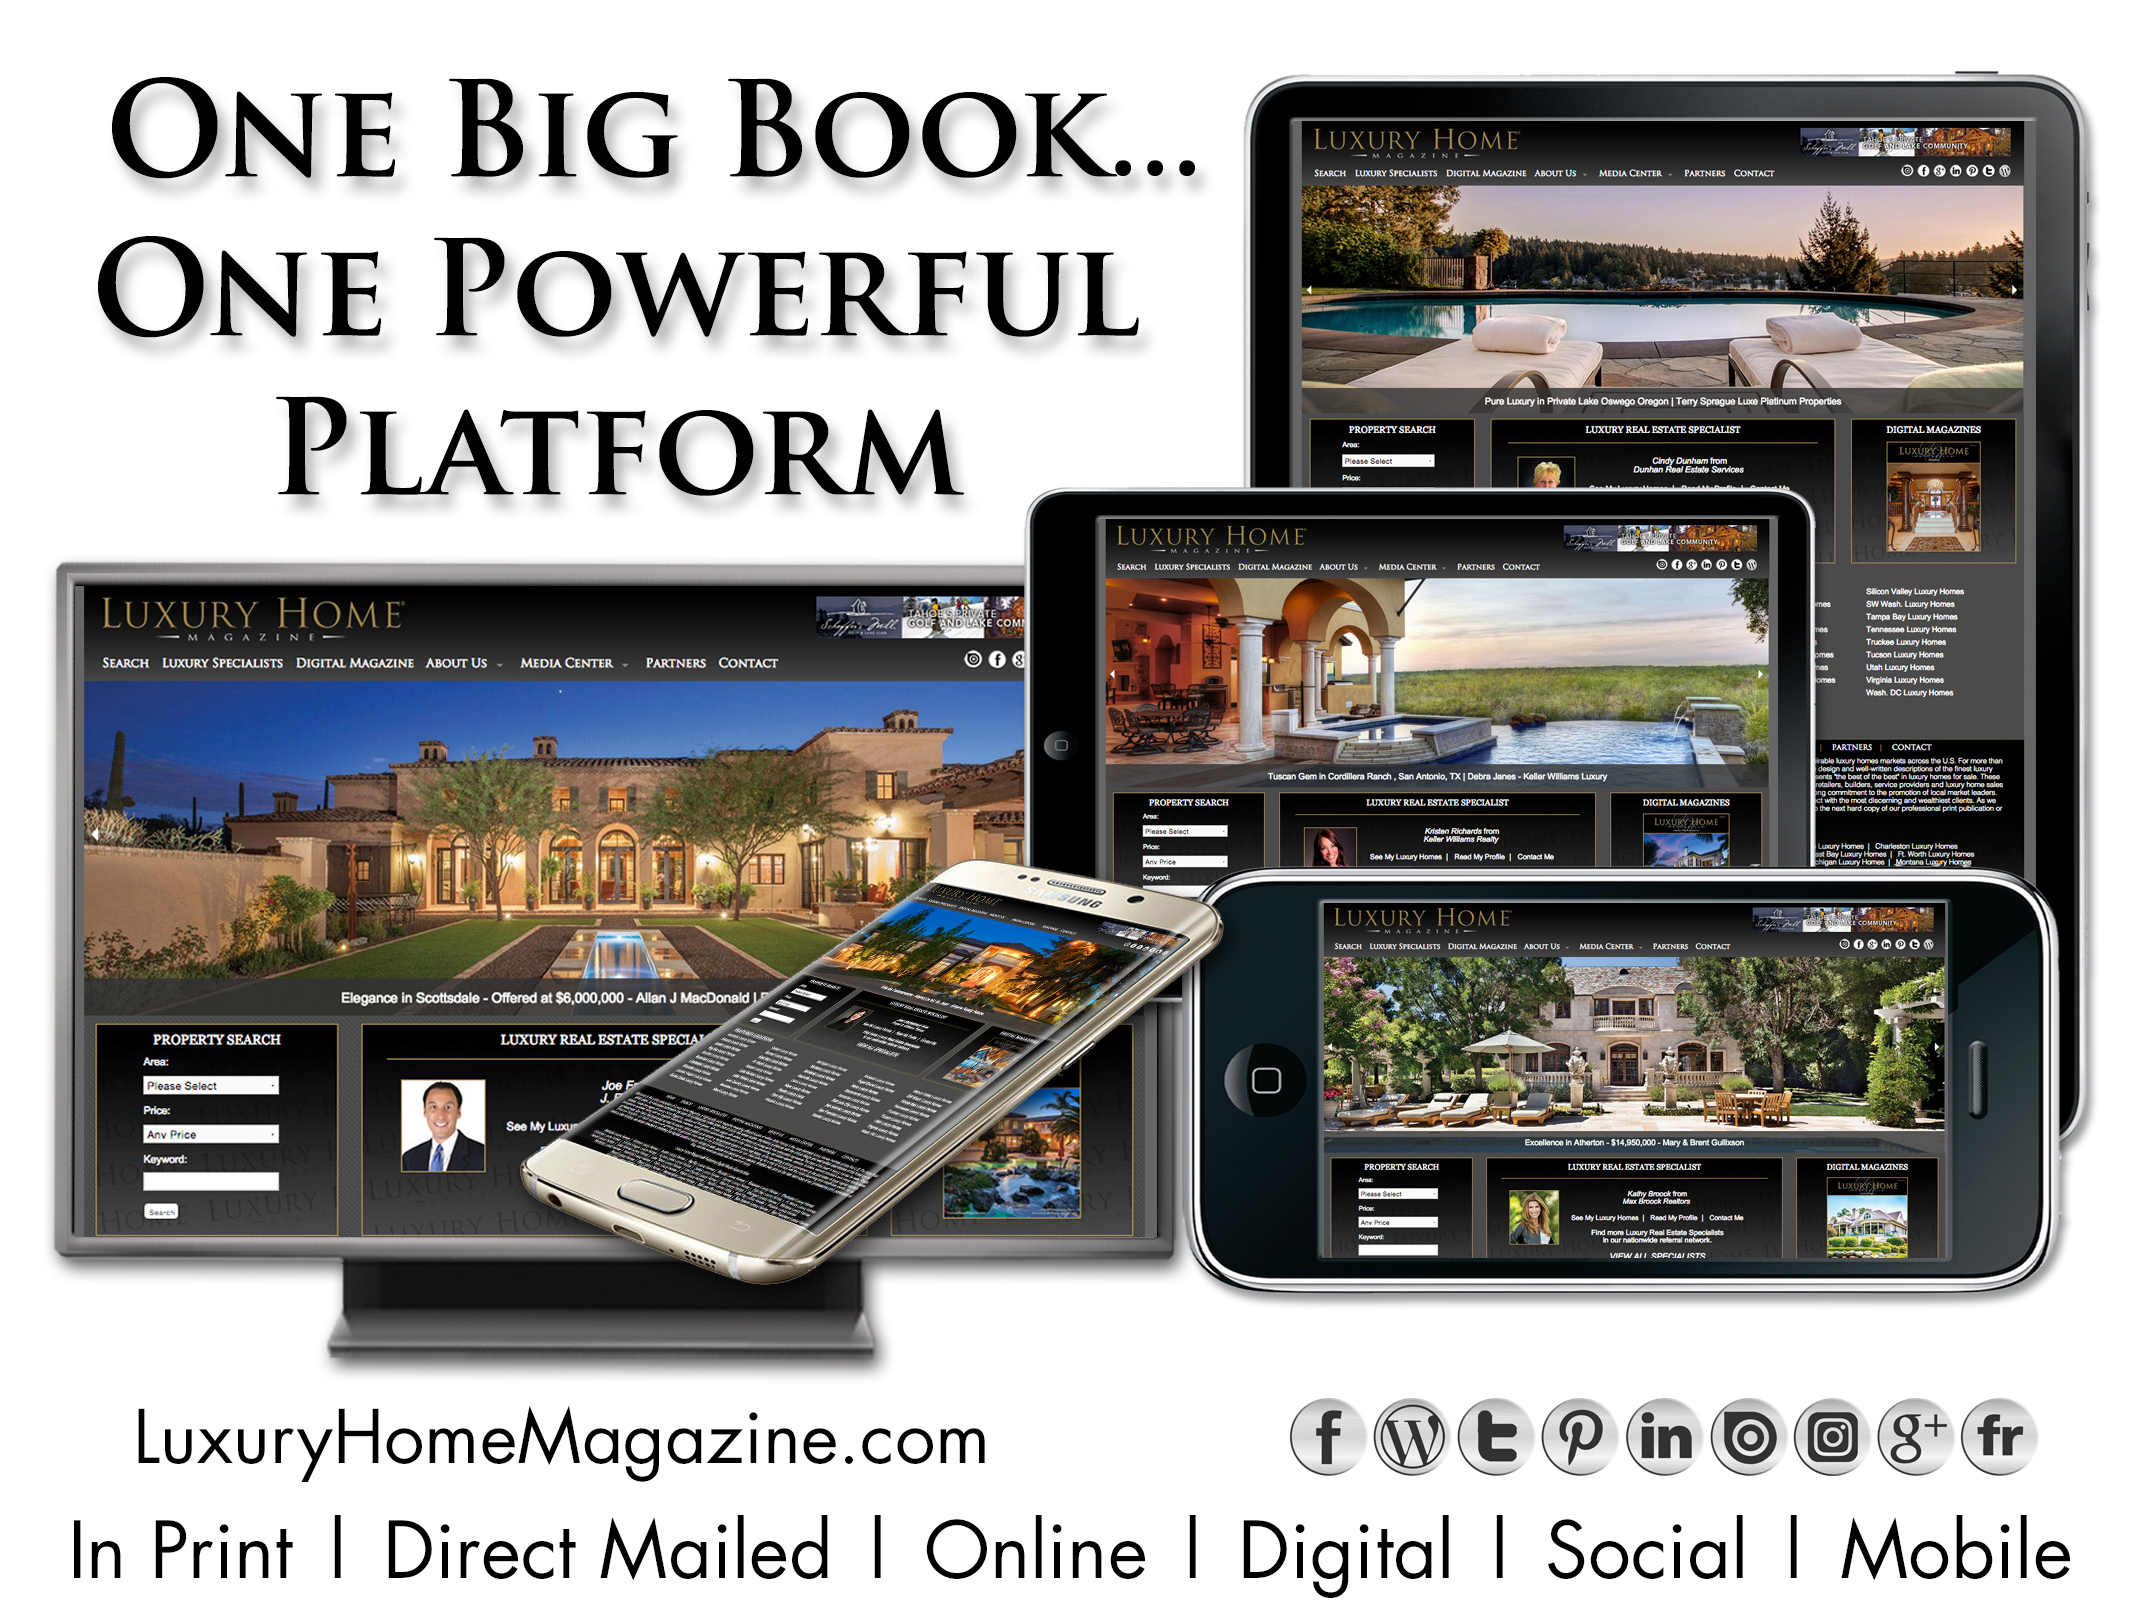 One Big Book, One Powerful Platform